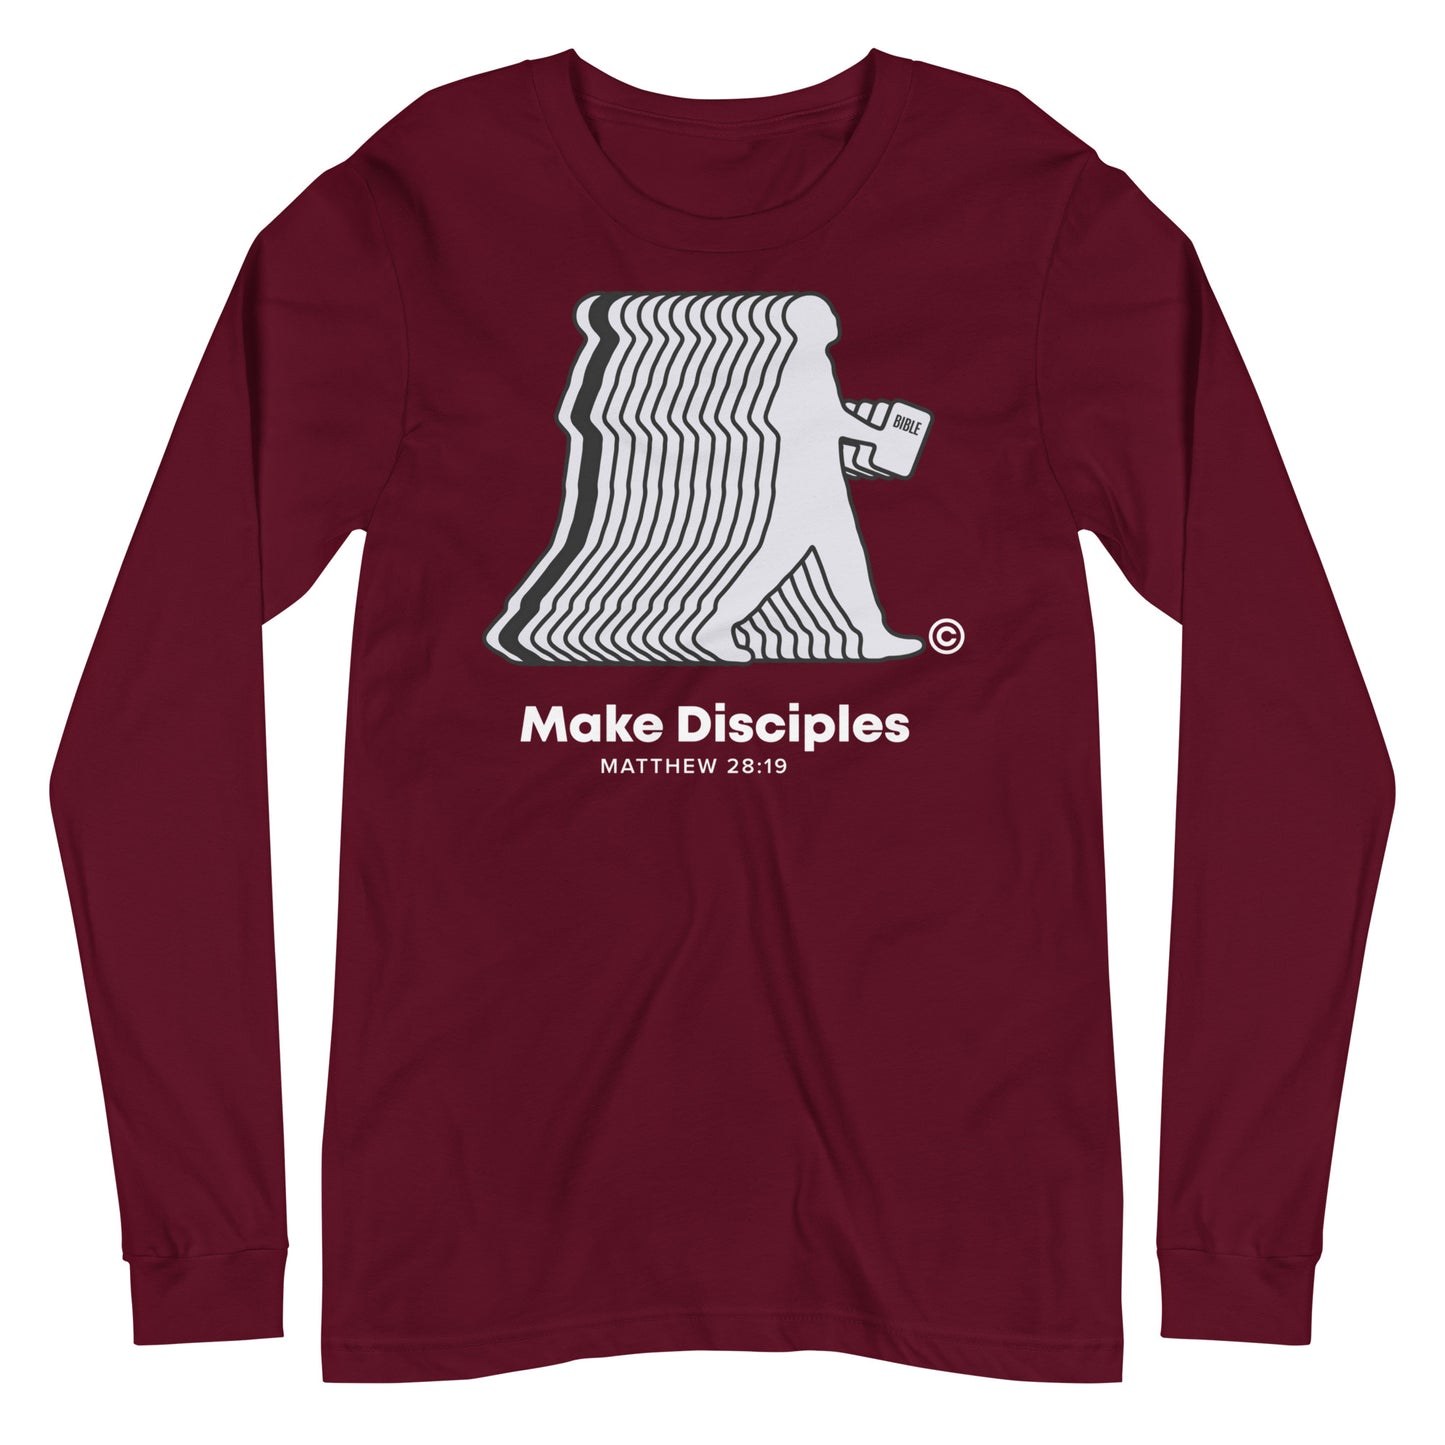 Make Disciples Dark-Colored Women's Long Sleeve Tee